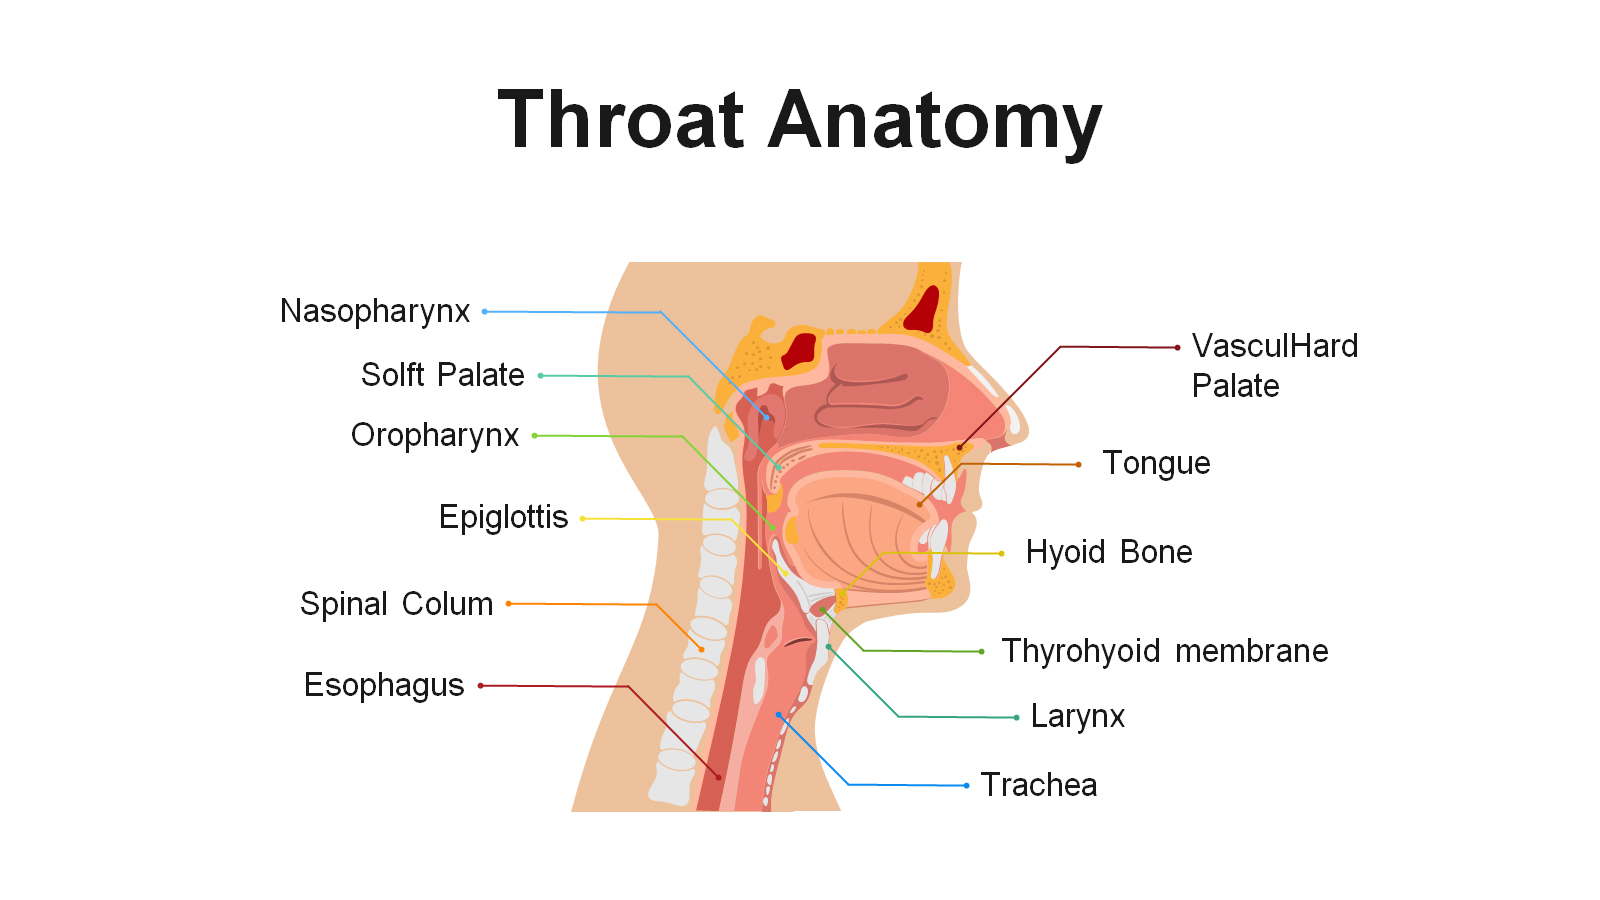 The throat anatomy explained